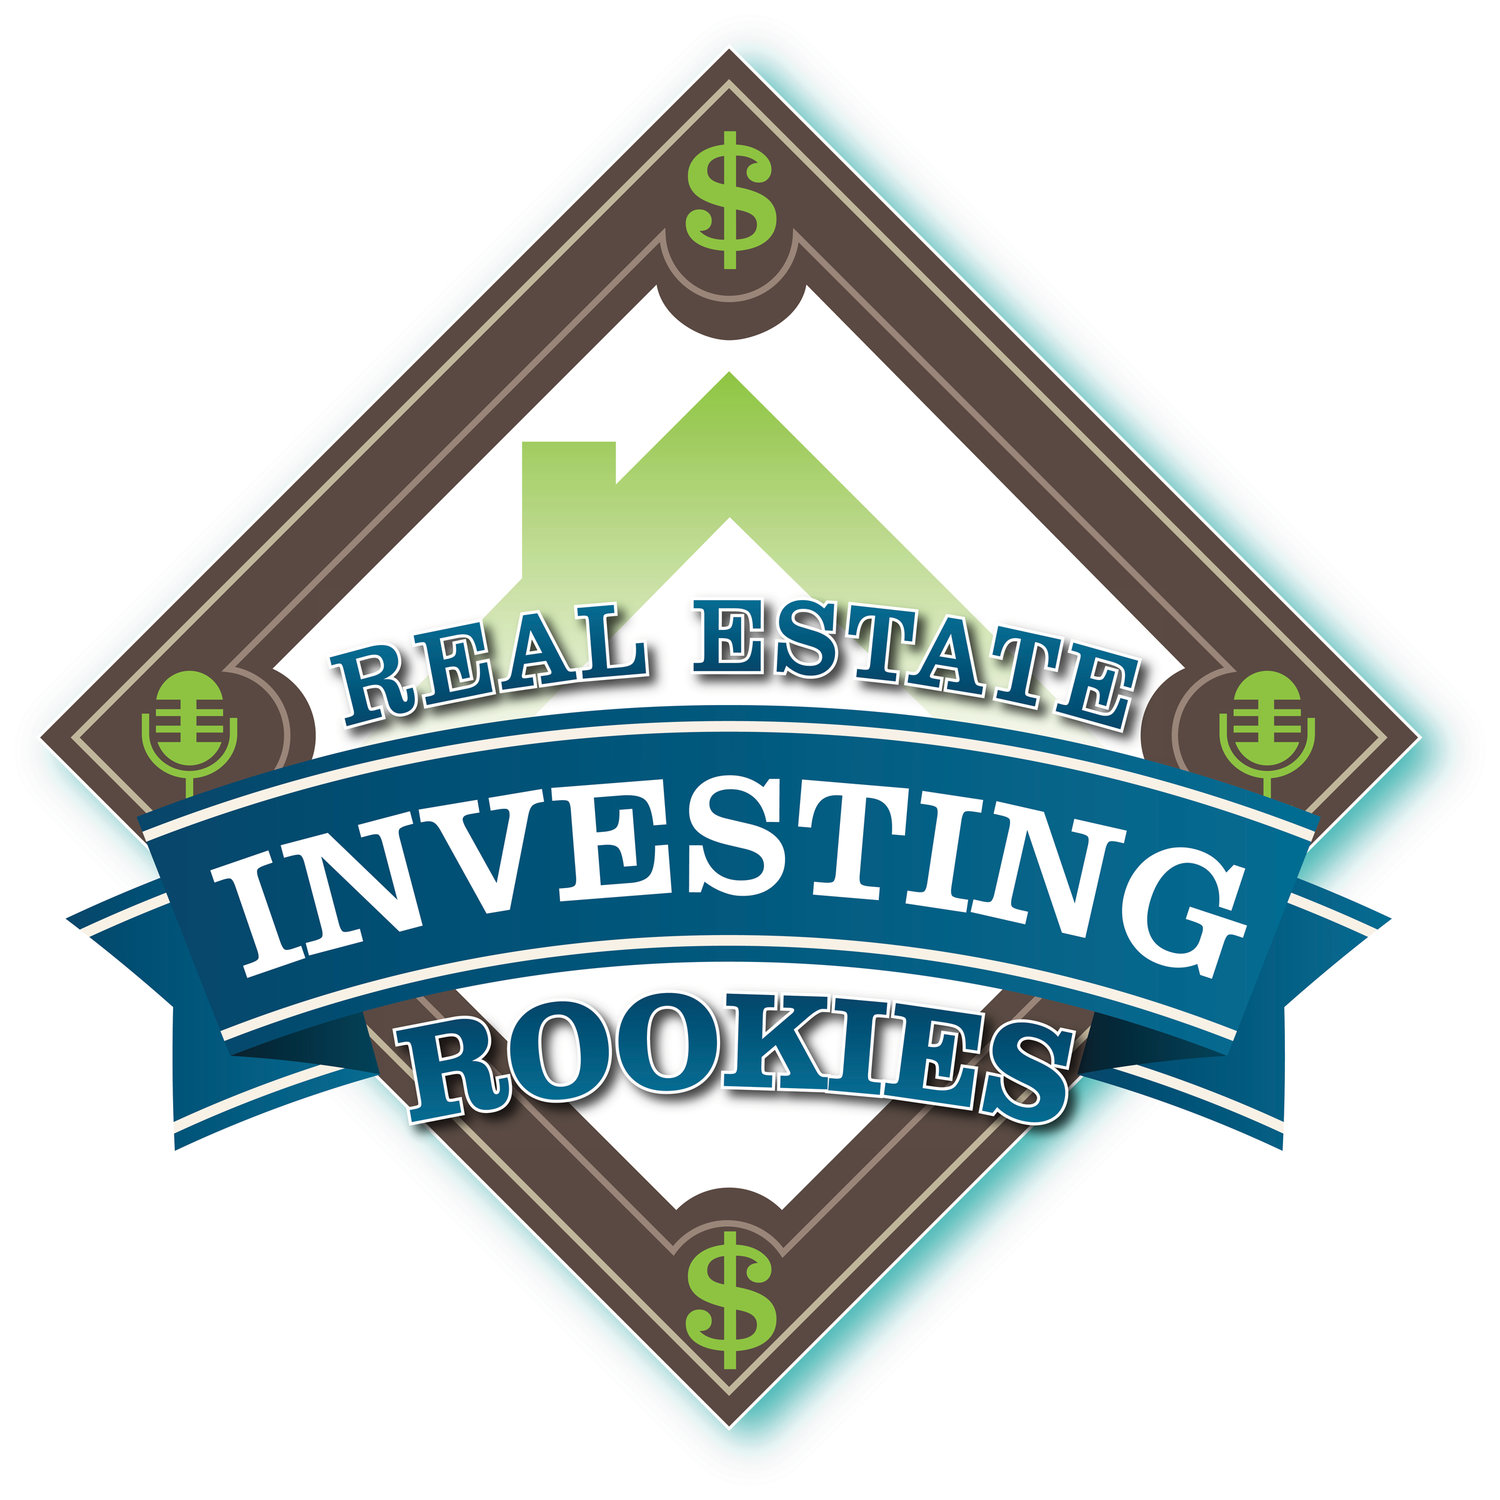 Artwork for podcast REI Mastermind Network | Real Estate Investing Strategies & Mindset